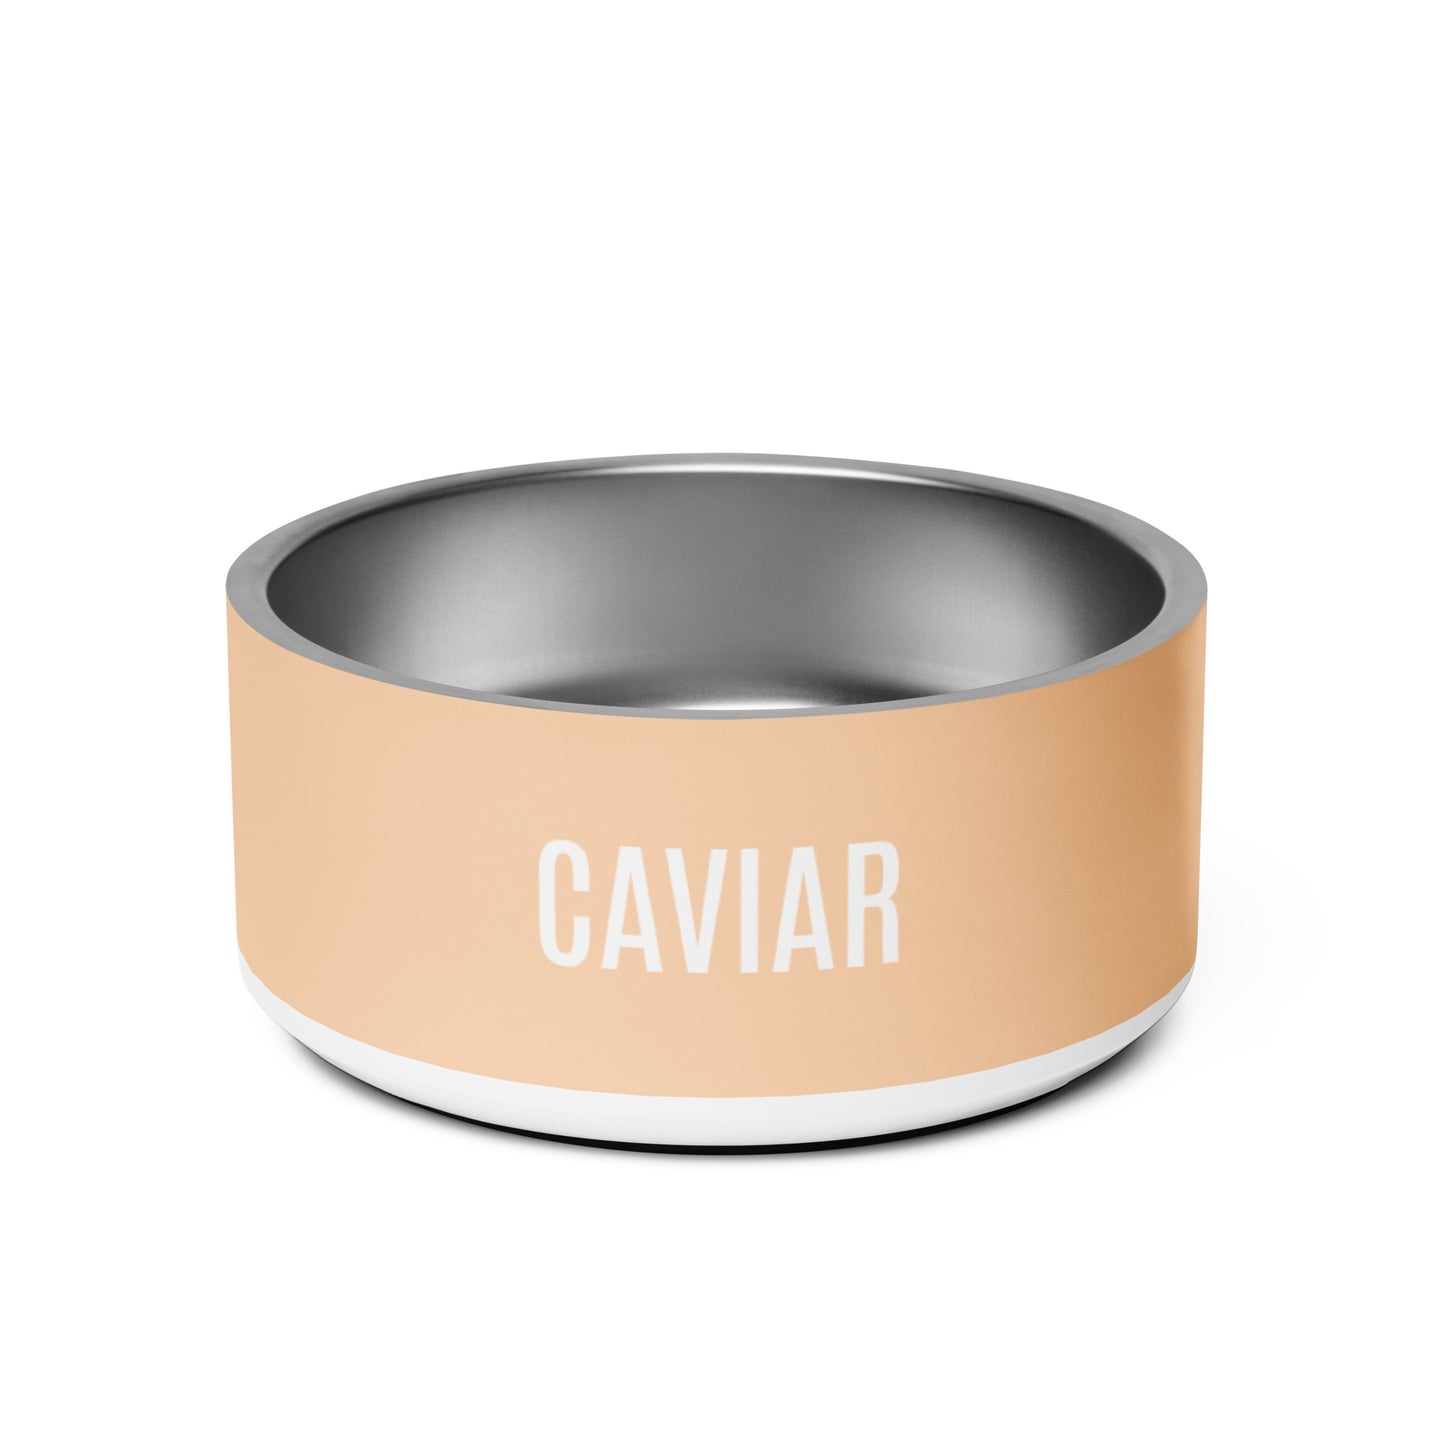 Pet Bowl "CAVIAR" in Peach Creamsicle